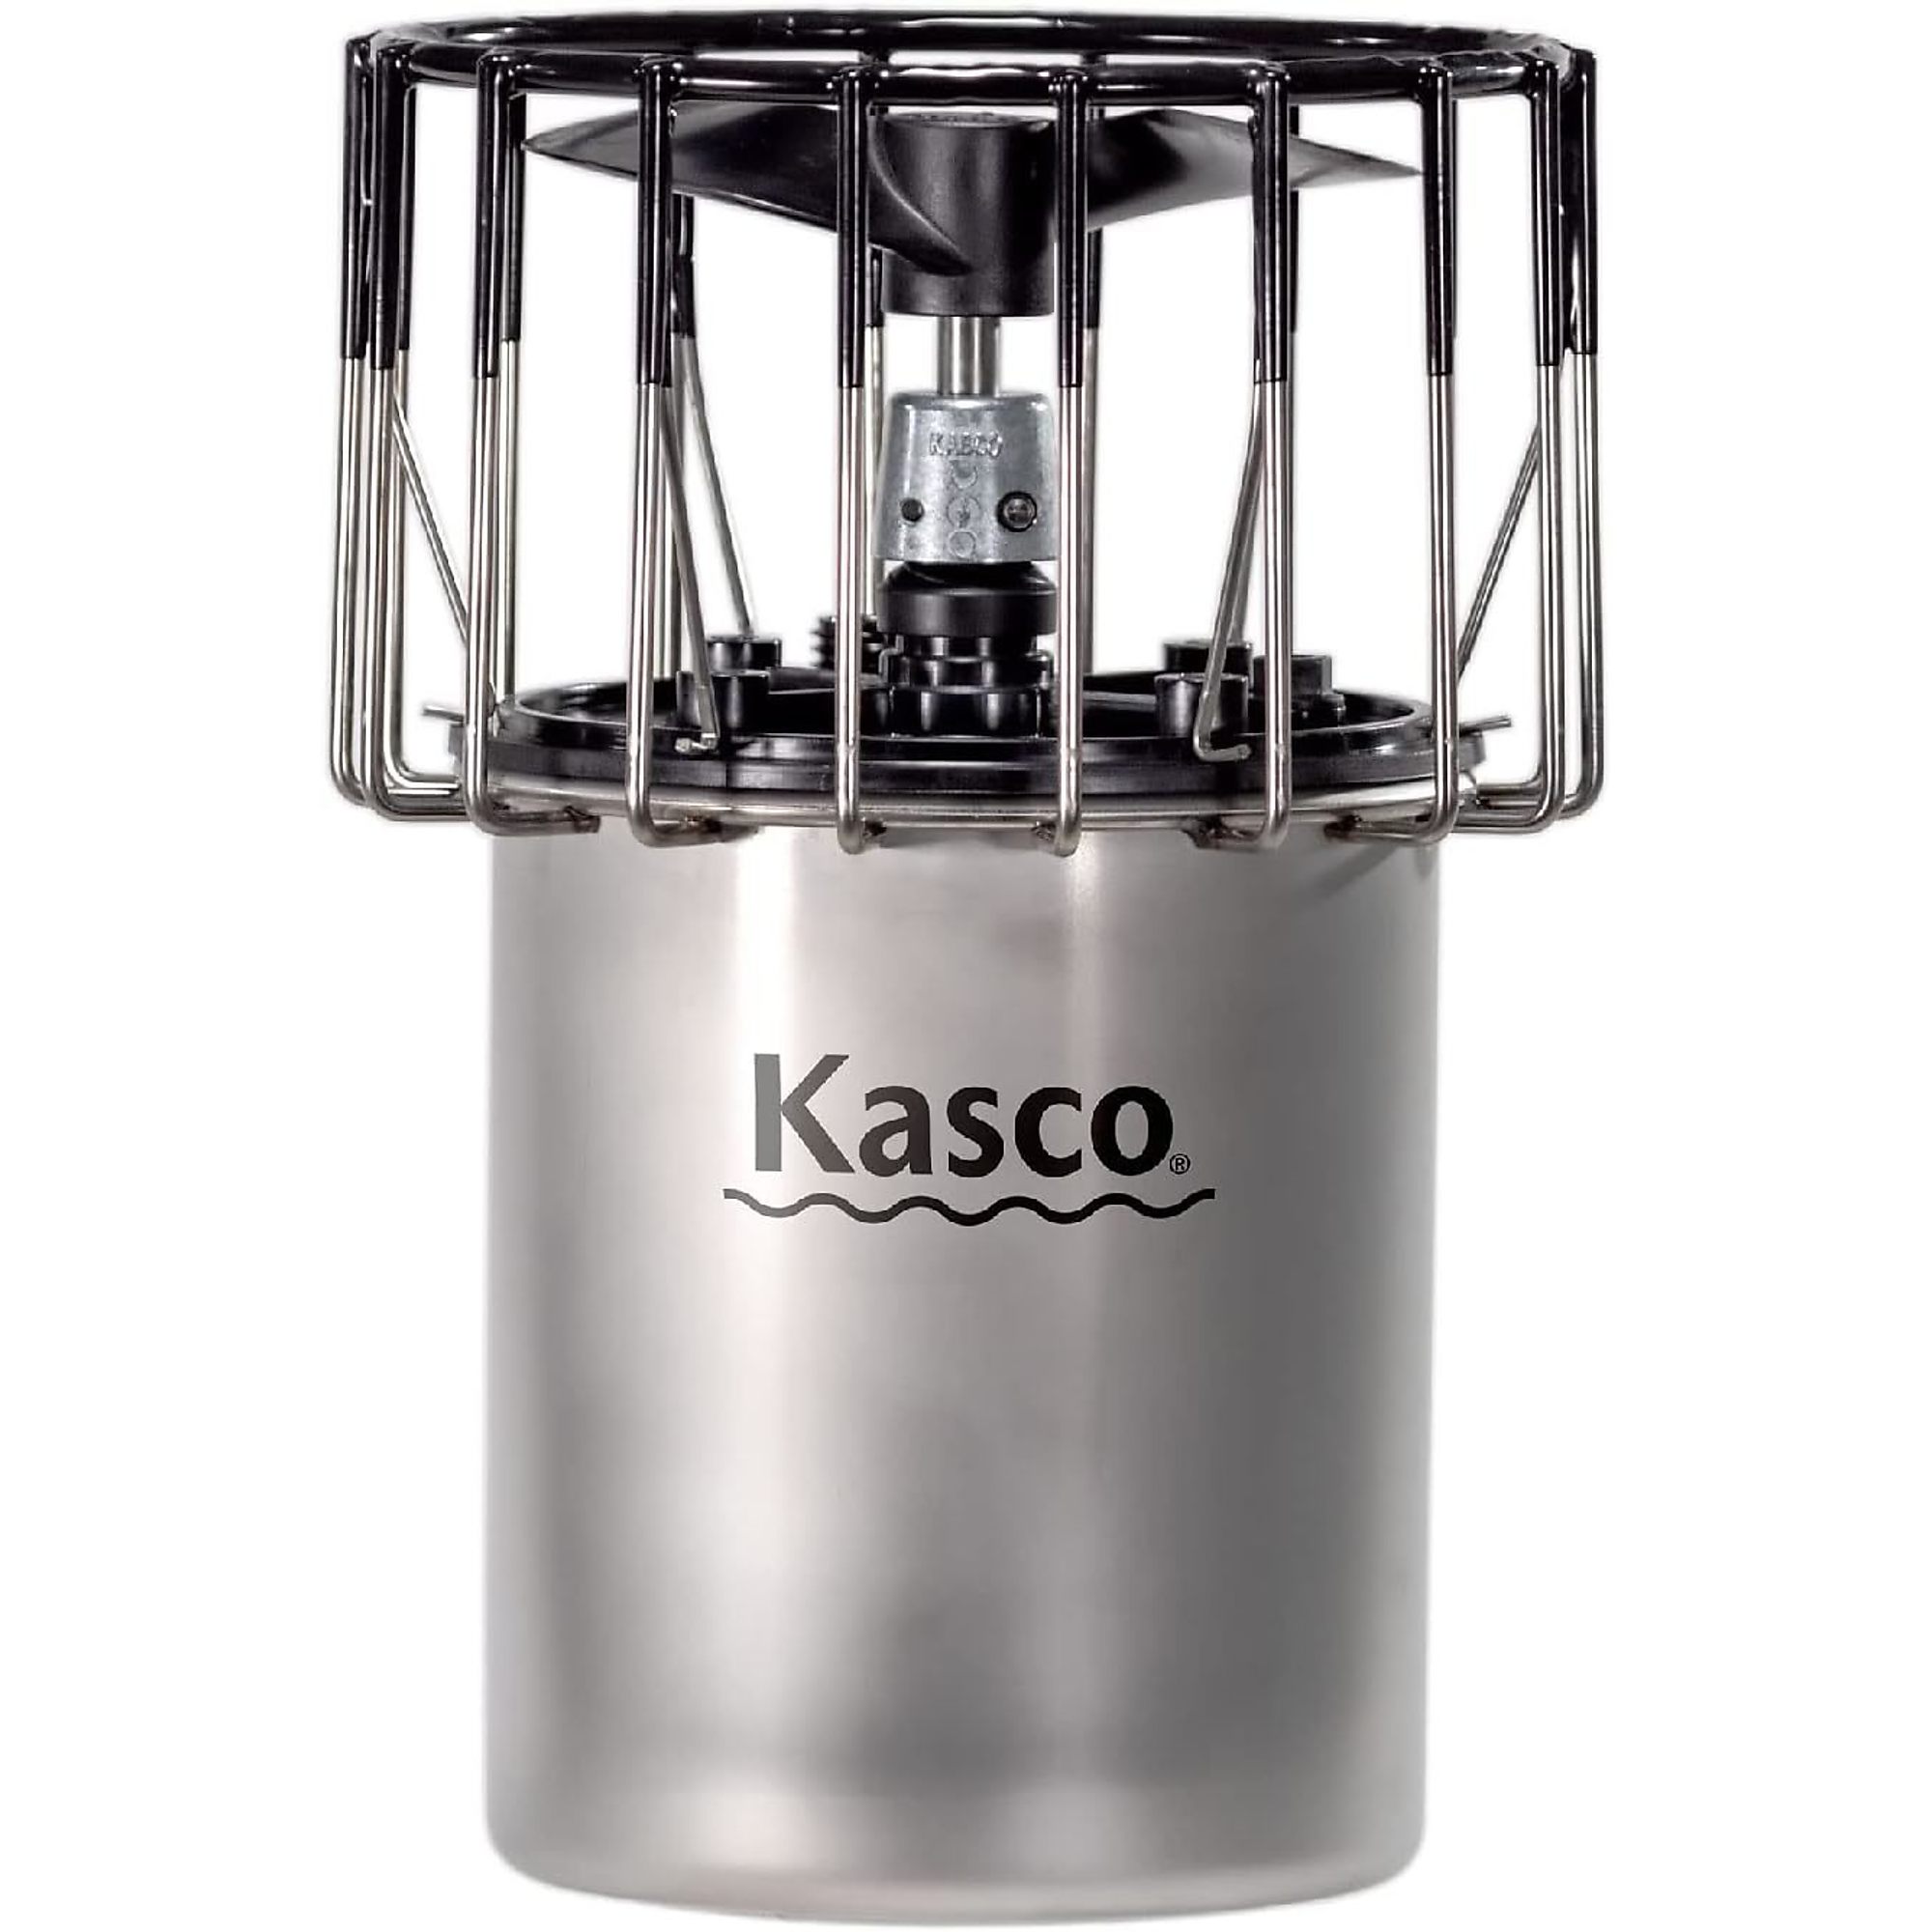 Kasco, De-icer Single for Pond and Lake Bubbler 240V, Volts 240 Power Cord Length 50 ft, Model 3400HD050